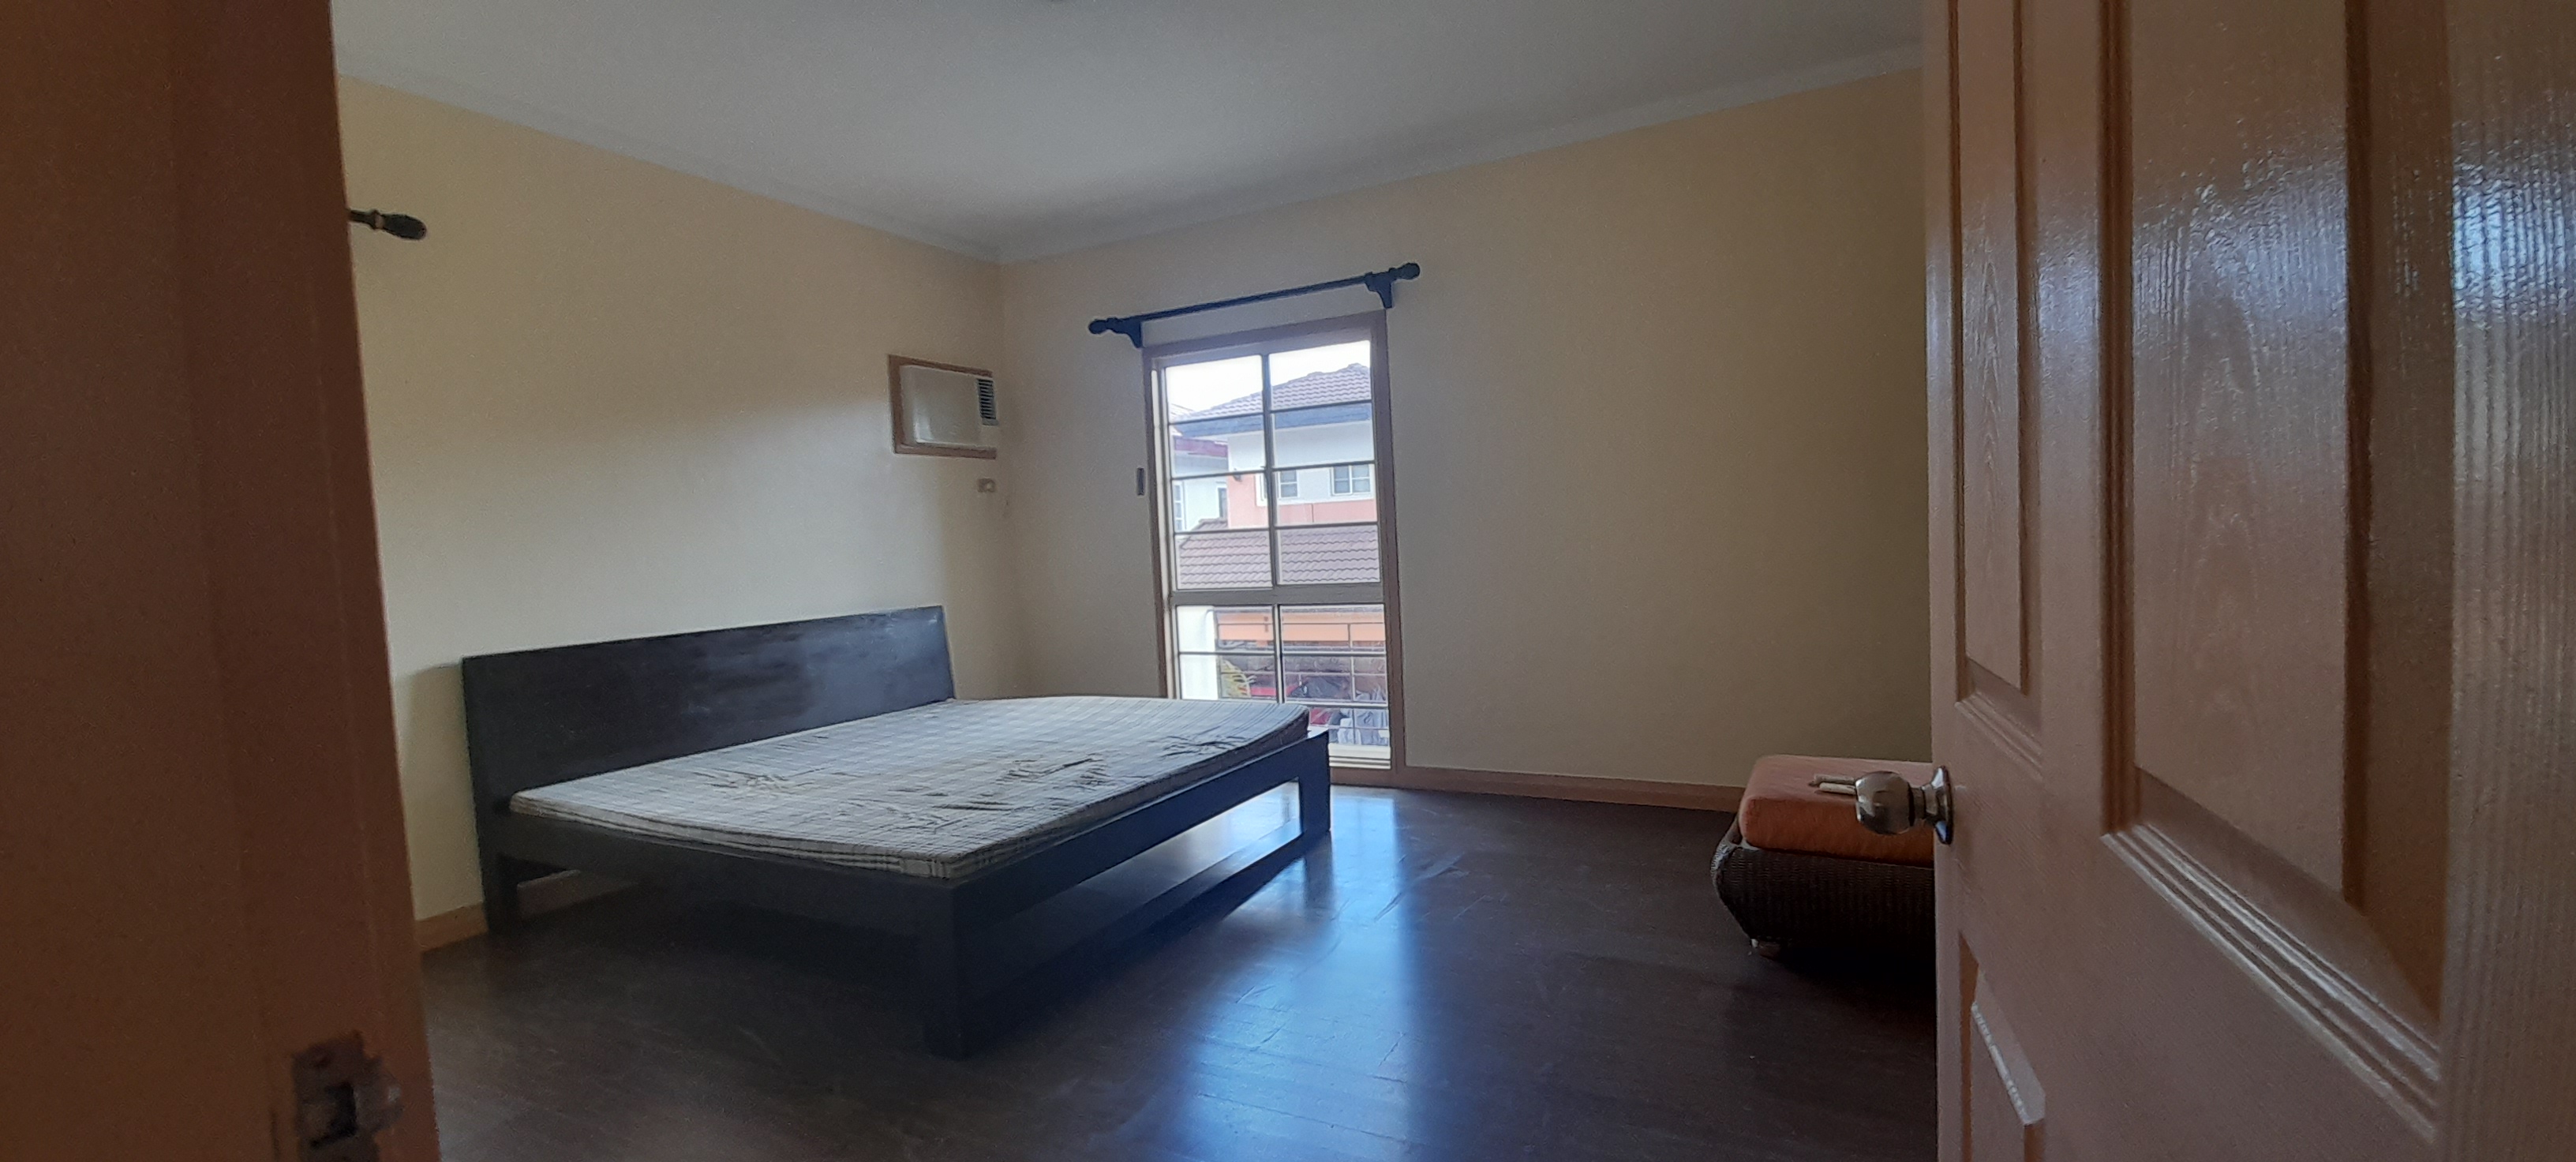 5-bedroom-semi-furnished-house-in-banawa-cebu-city